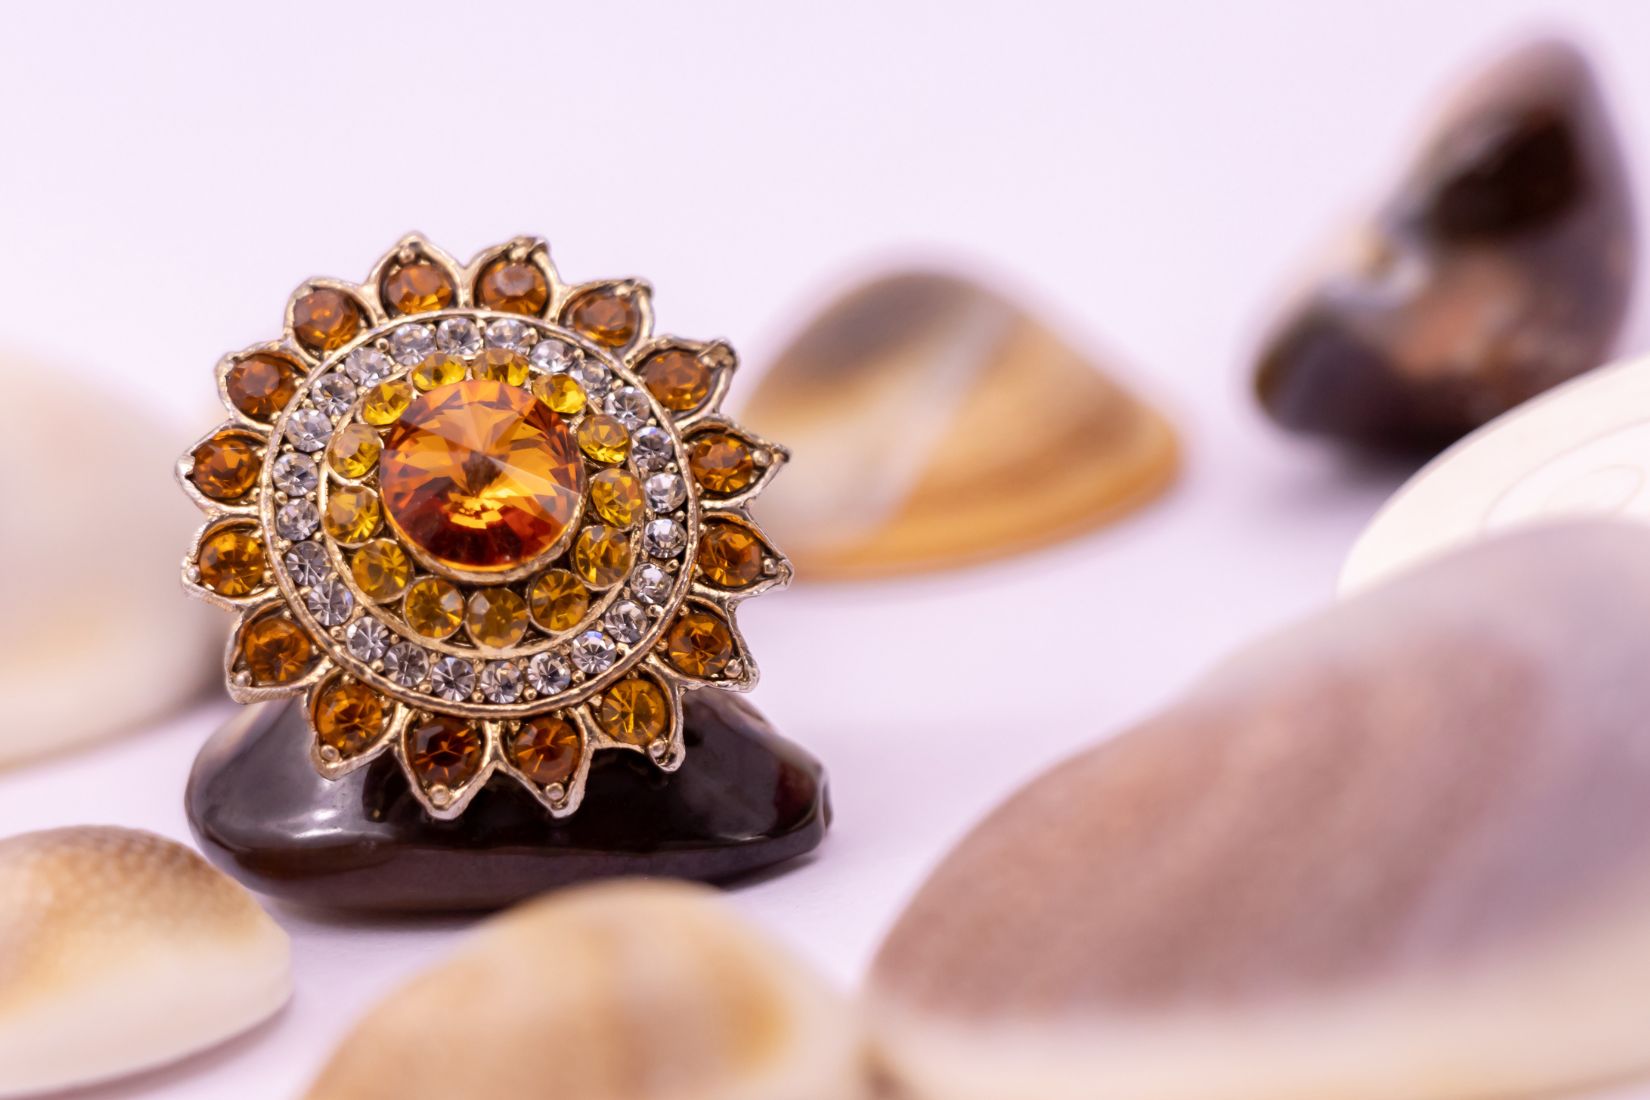 A beautiful Saffron diamond engagement ring